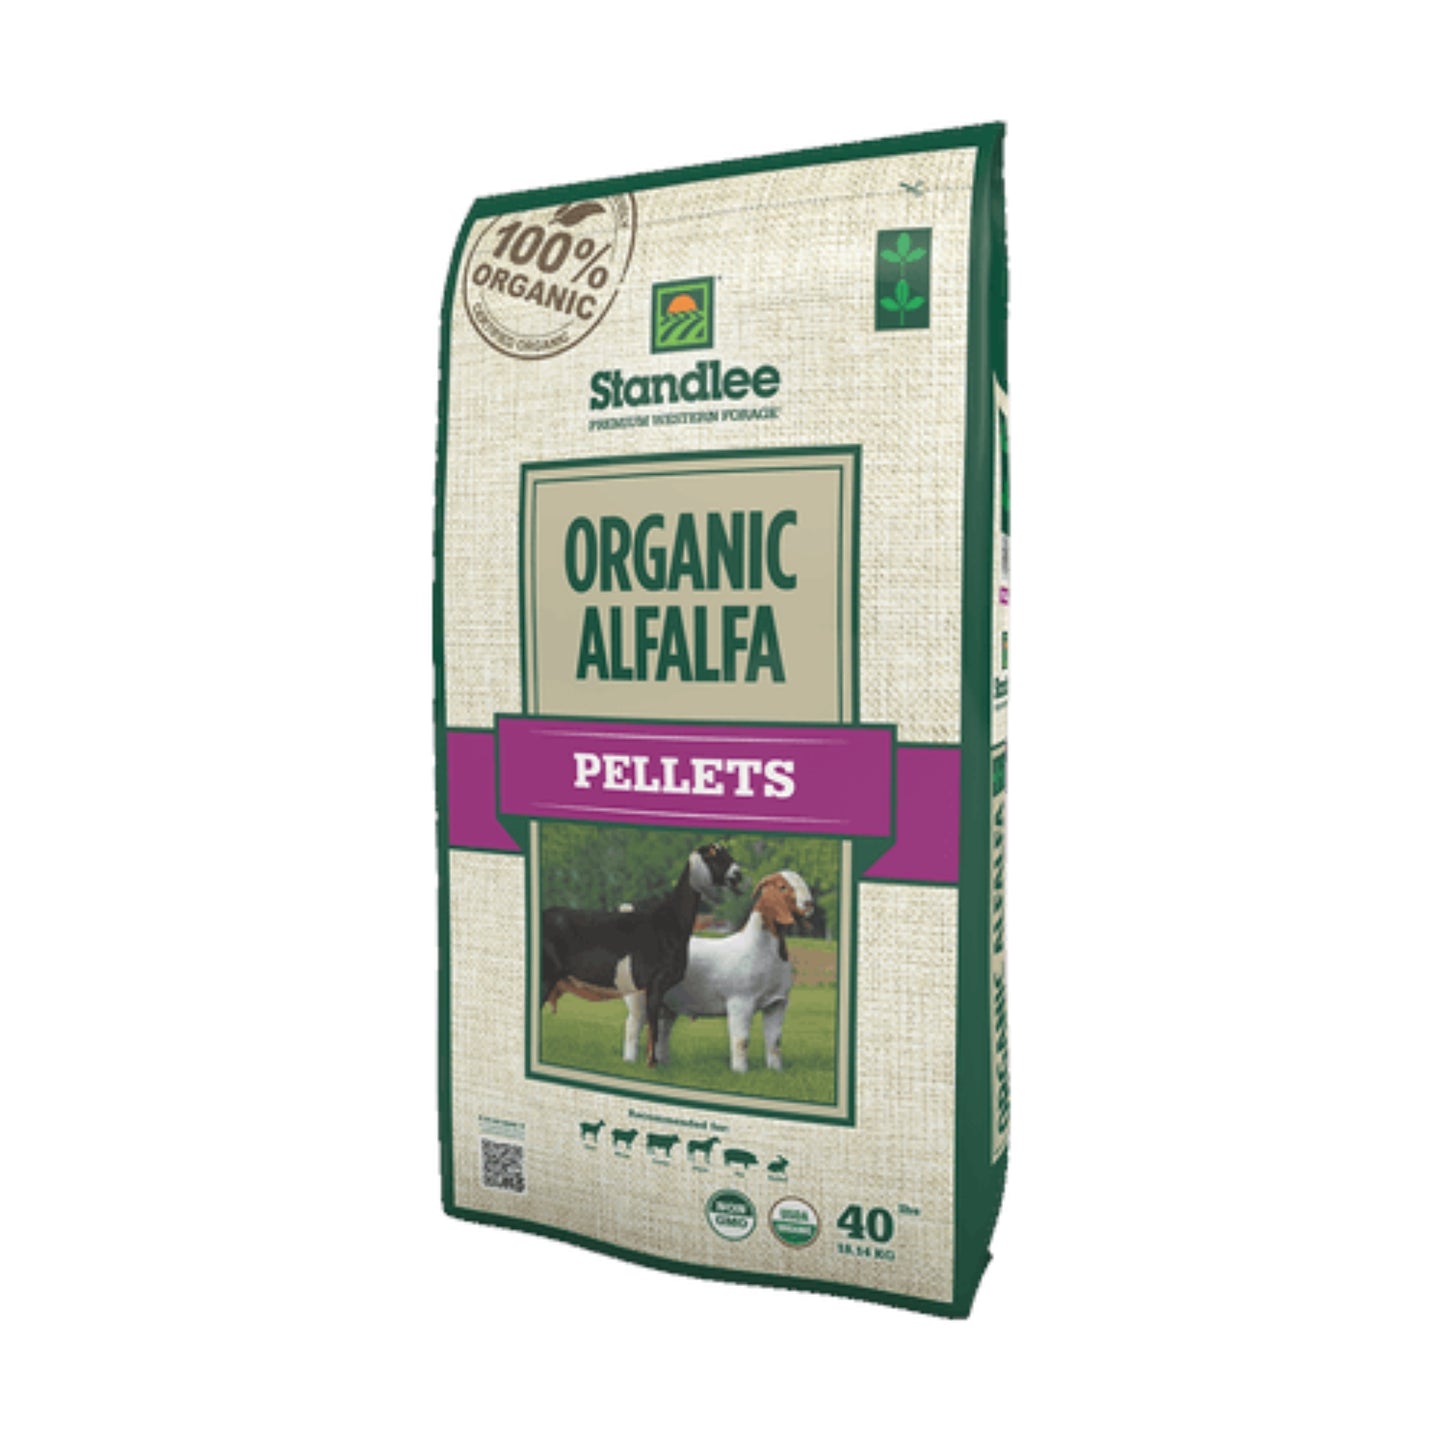 Standlee Organic Alfalfa Pellets Farm/Pet Animal Food, 40Lb